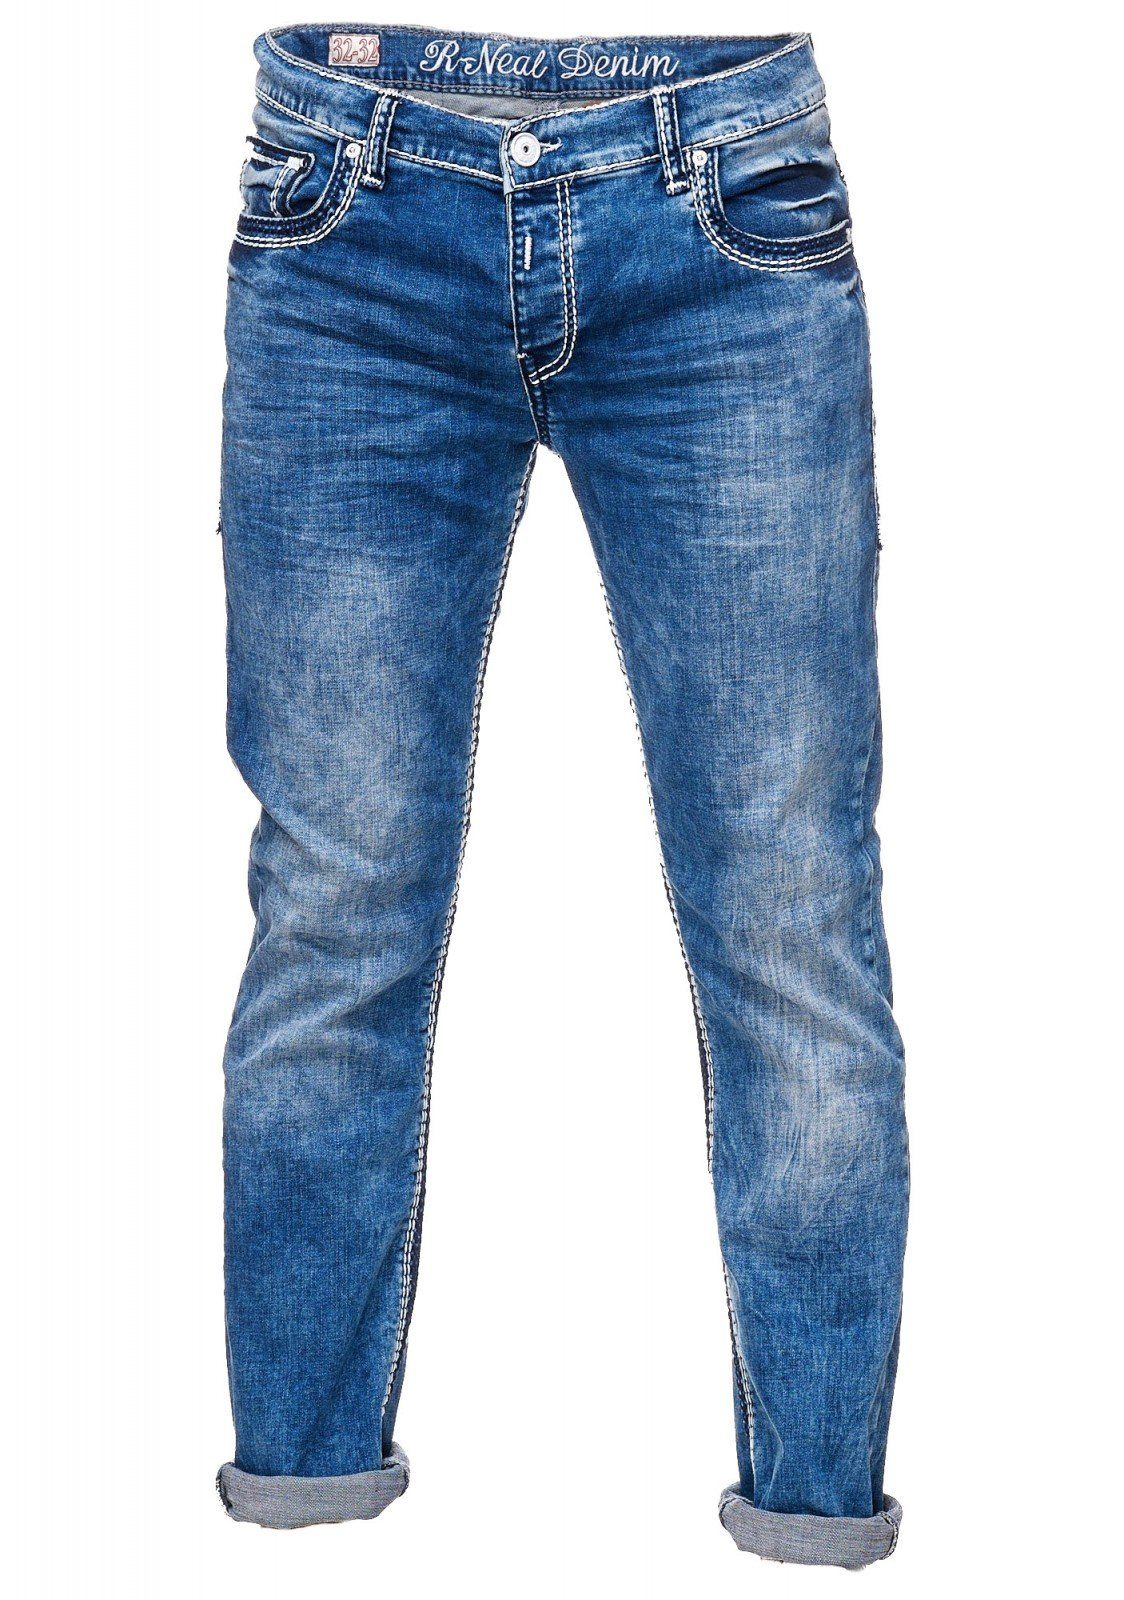 mit Neal Rusty Regular-fit-Jeans jeansblau dezenter Waschung